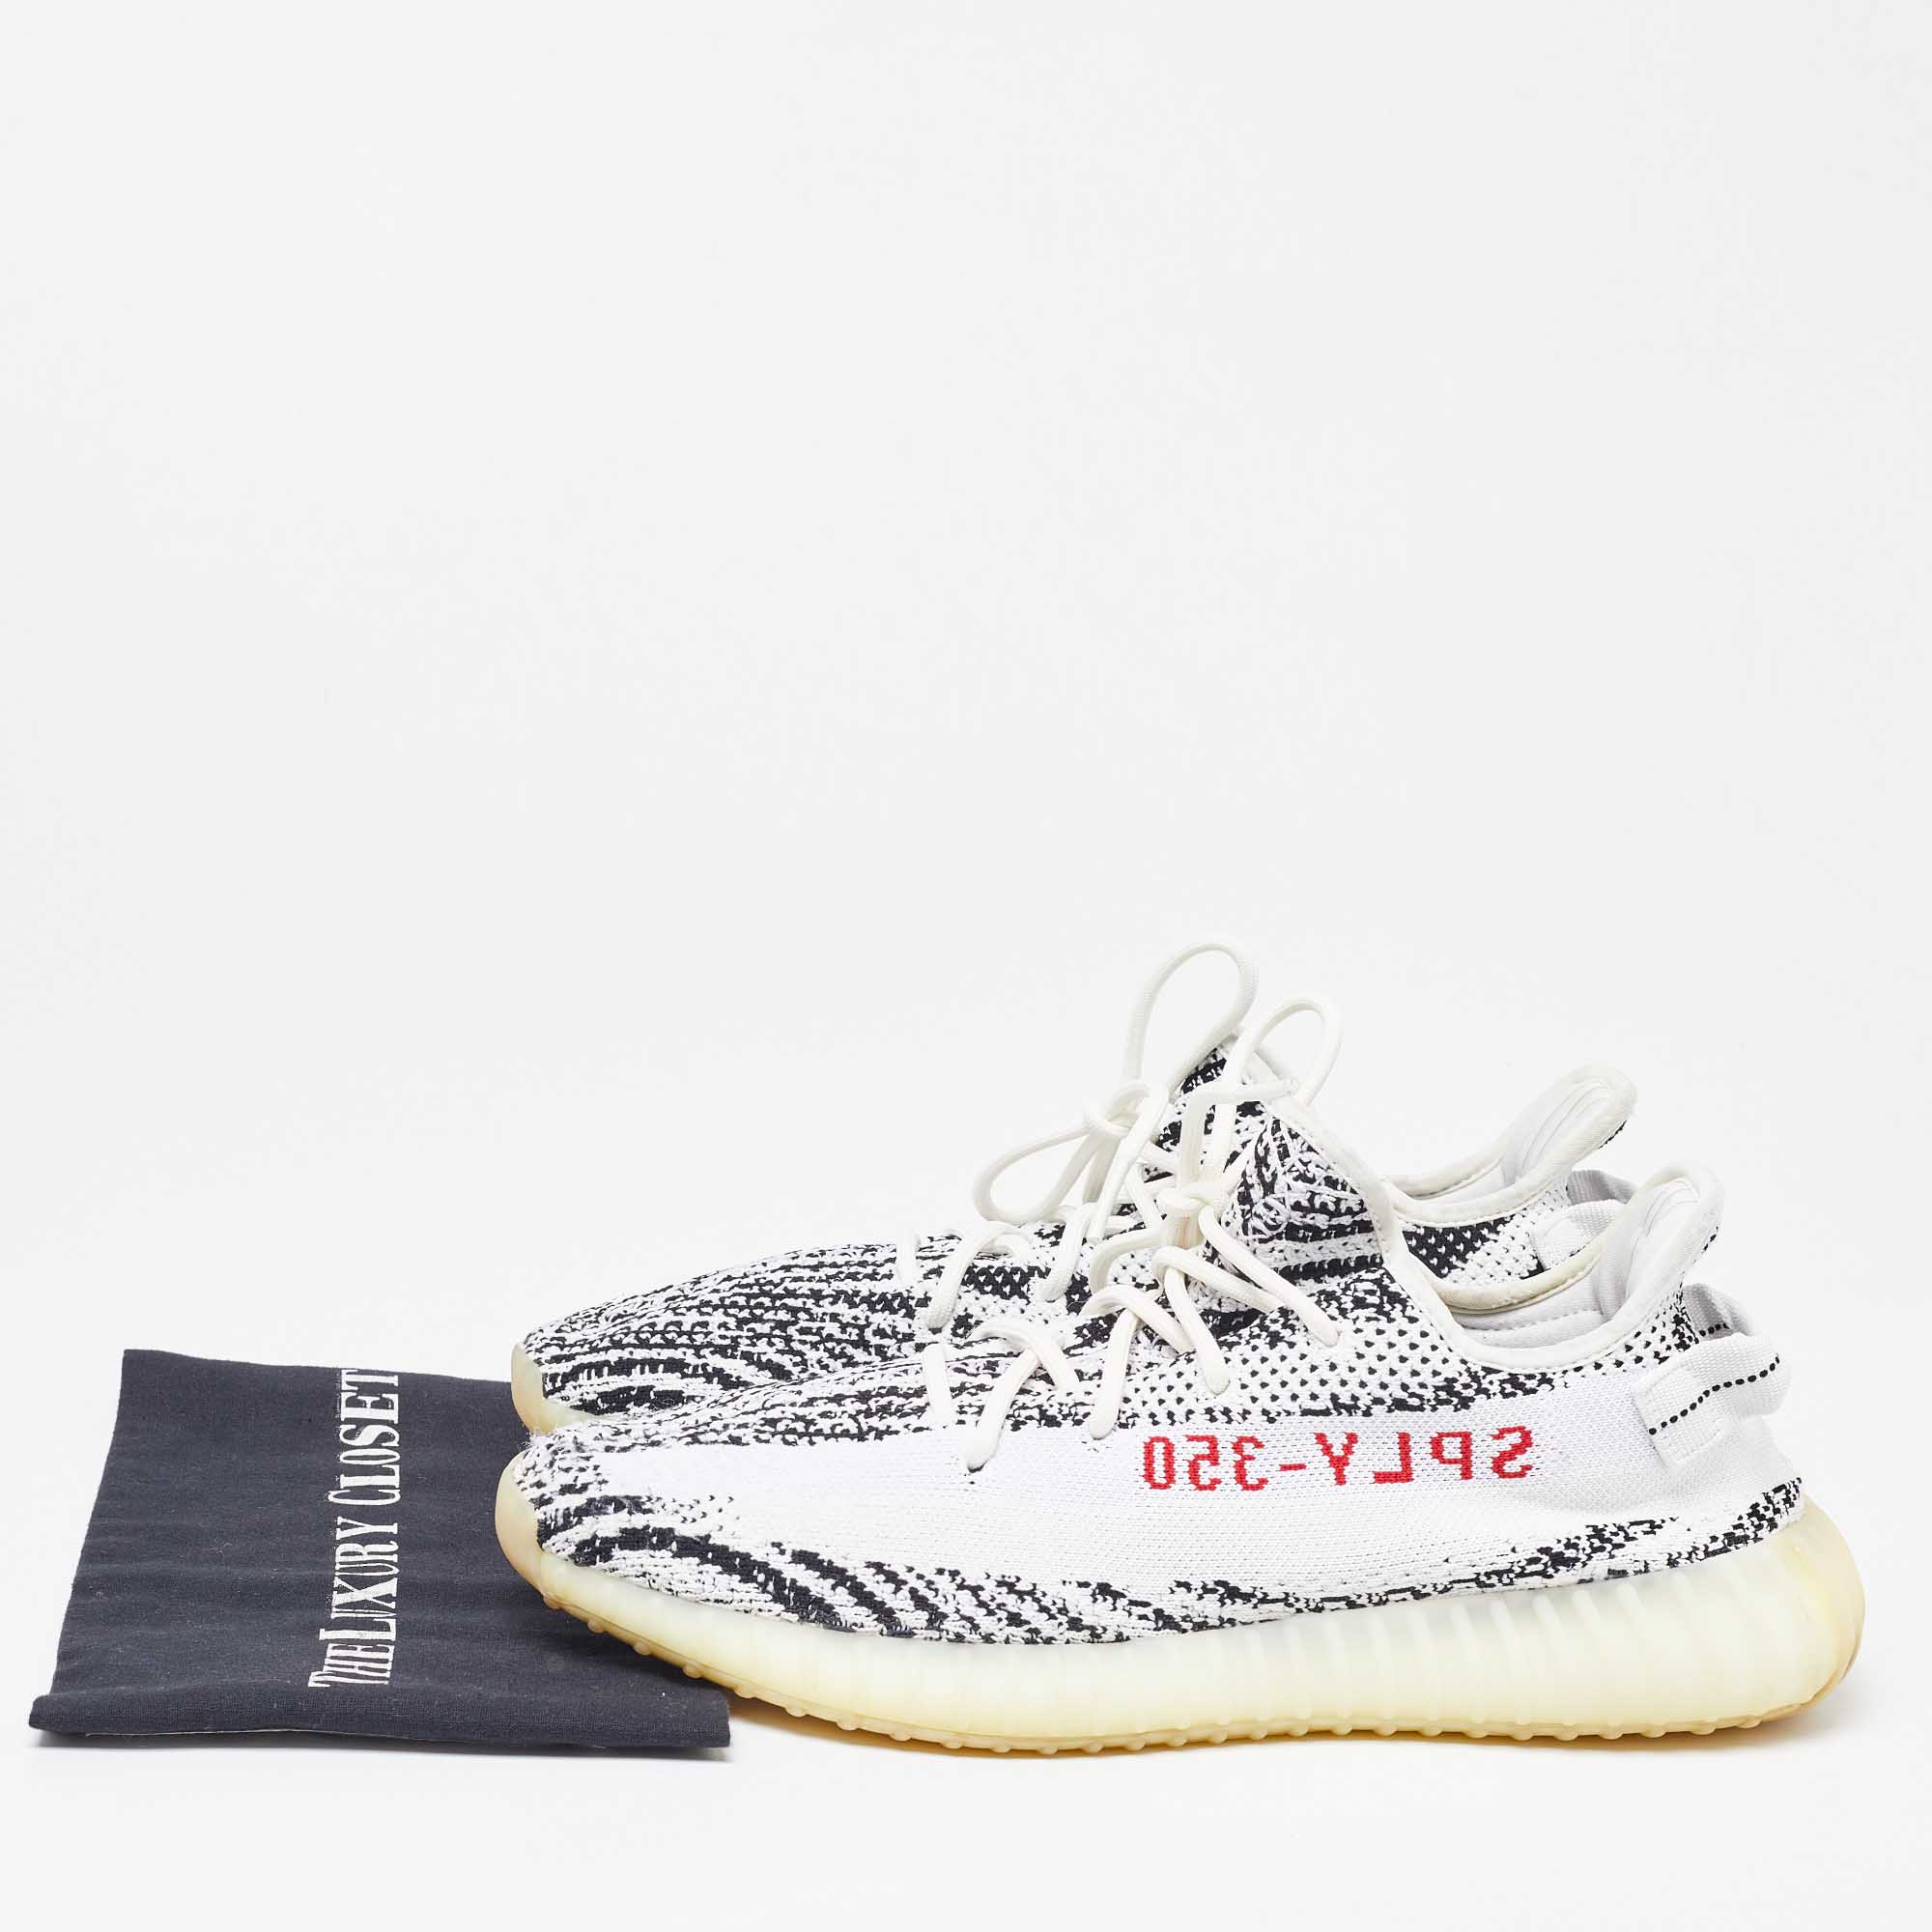 Yeezy X Adidas White/Black Knit Fabric Boost 350 V2 Zebra Sneakers Size 46 2/3